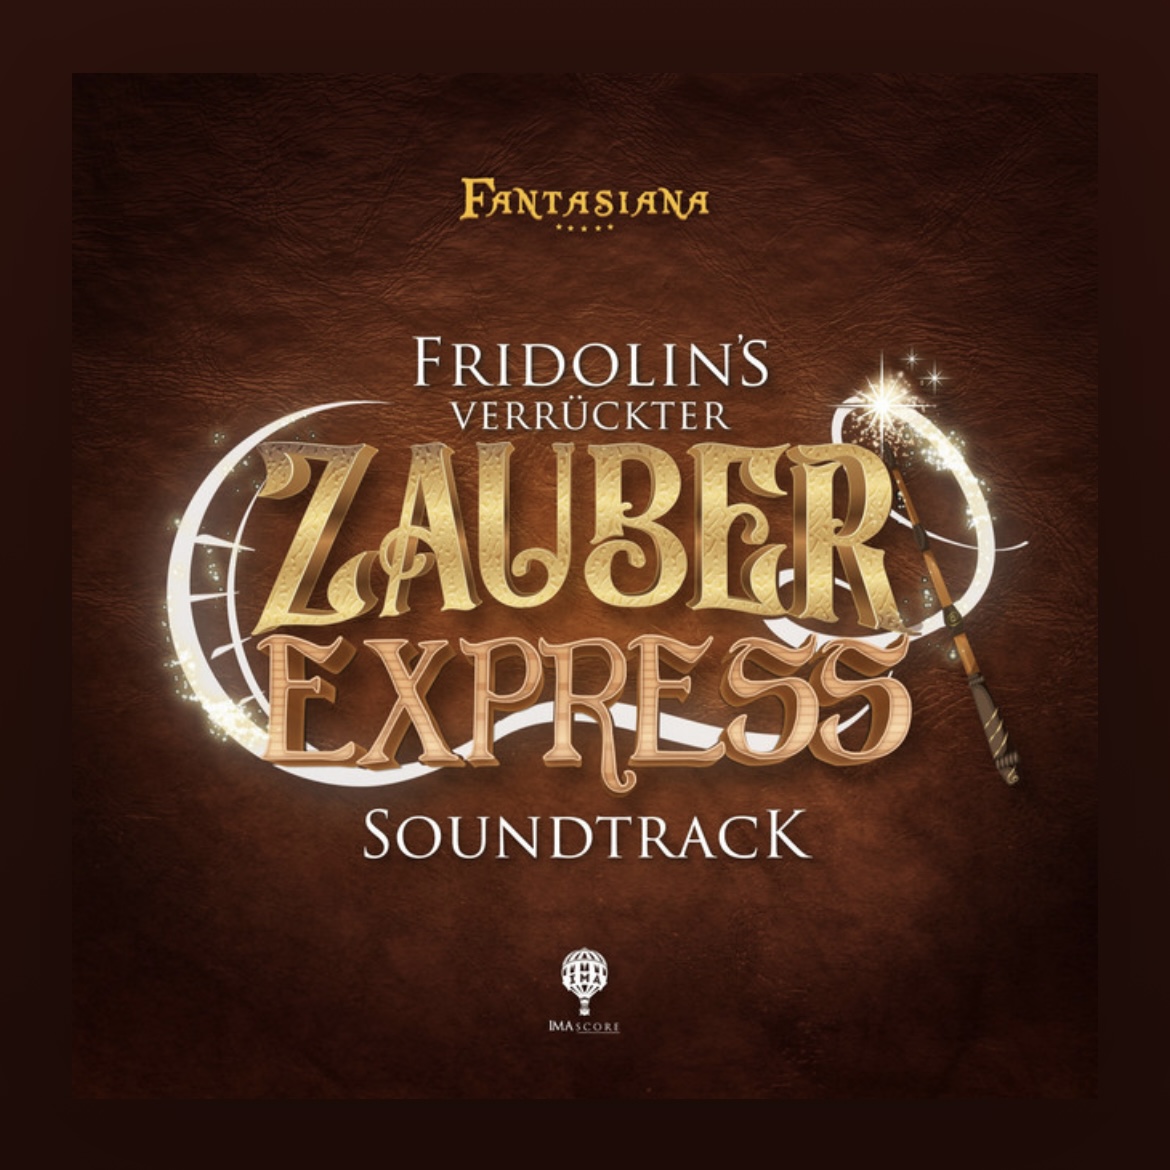 Soundtrack zu "Fridolin's verrückter Zauberexpress" auf Spotify verfügbar